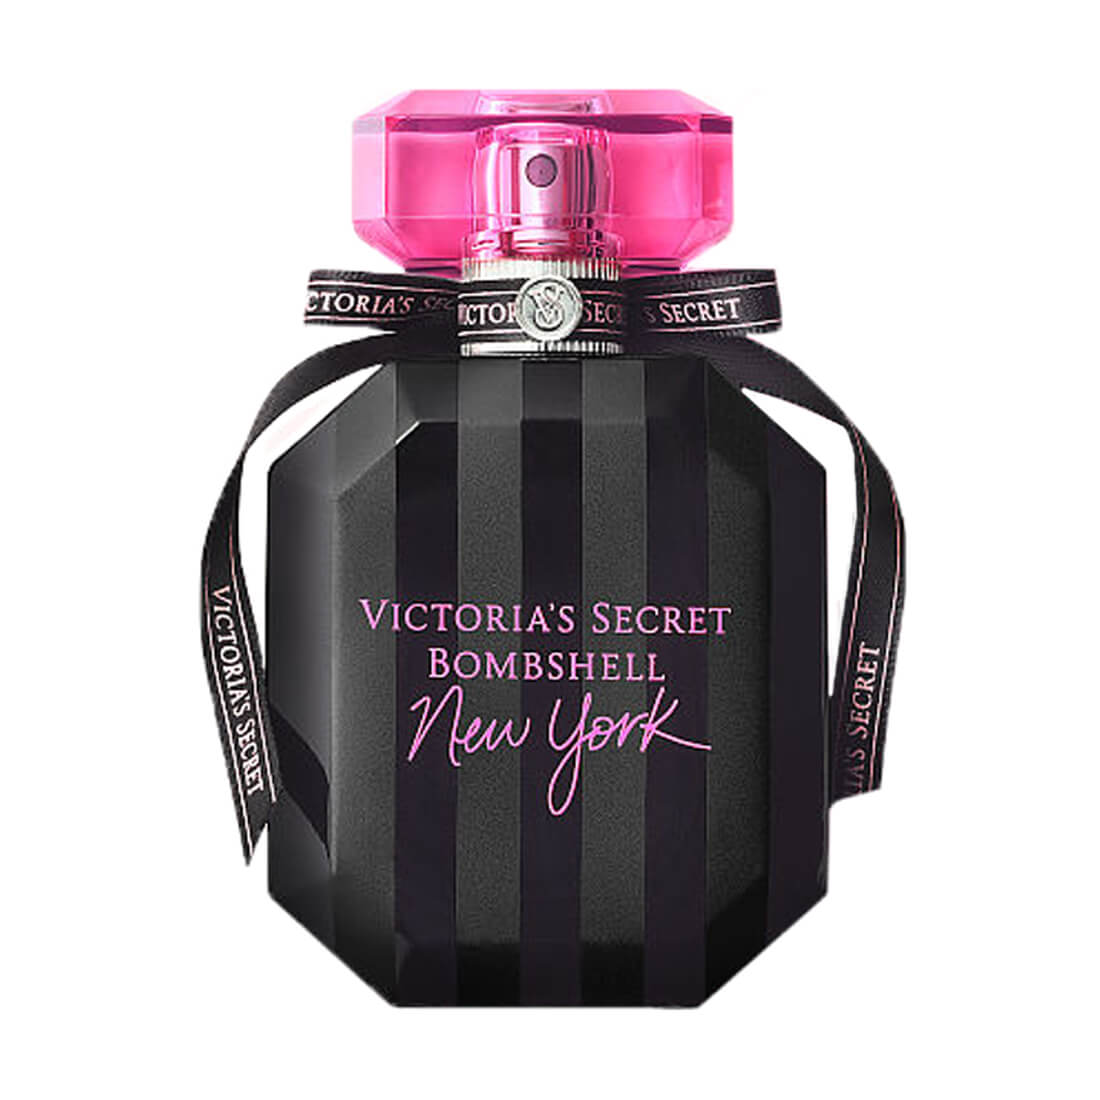 Victoria's Secret Bombshell New York Eau De Perfume - 50ml